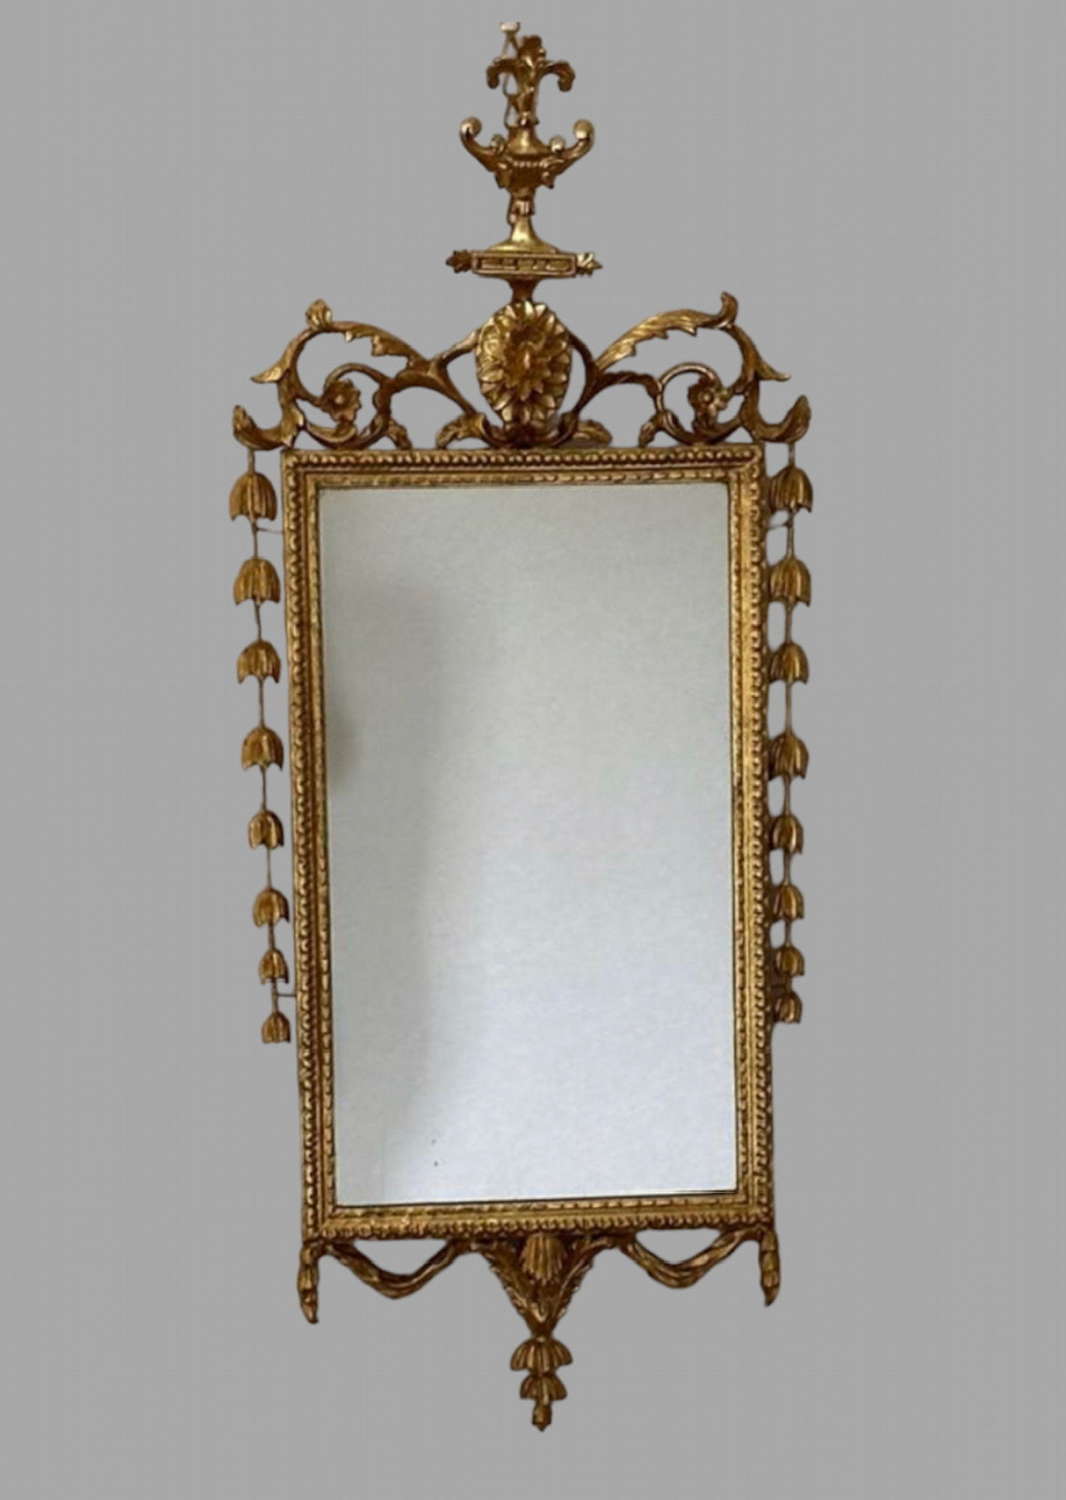 A Good Quality Decorative Gilt Mirror